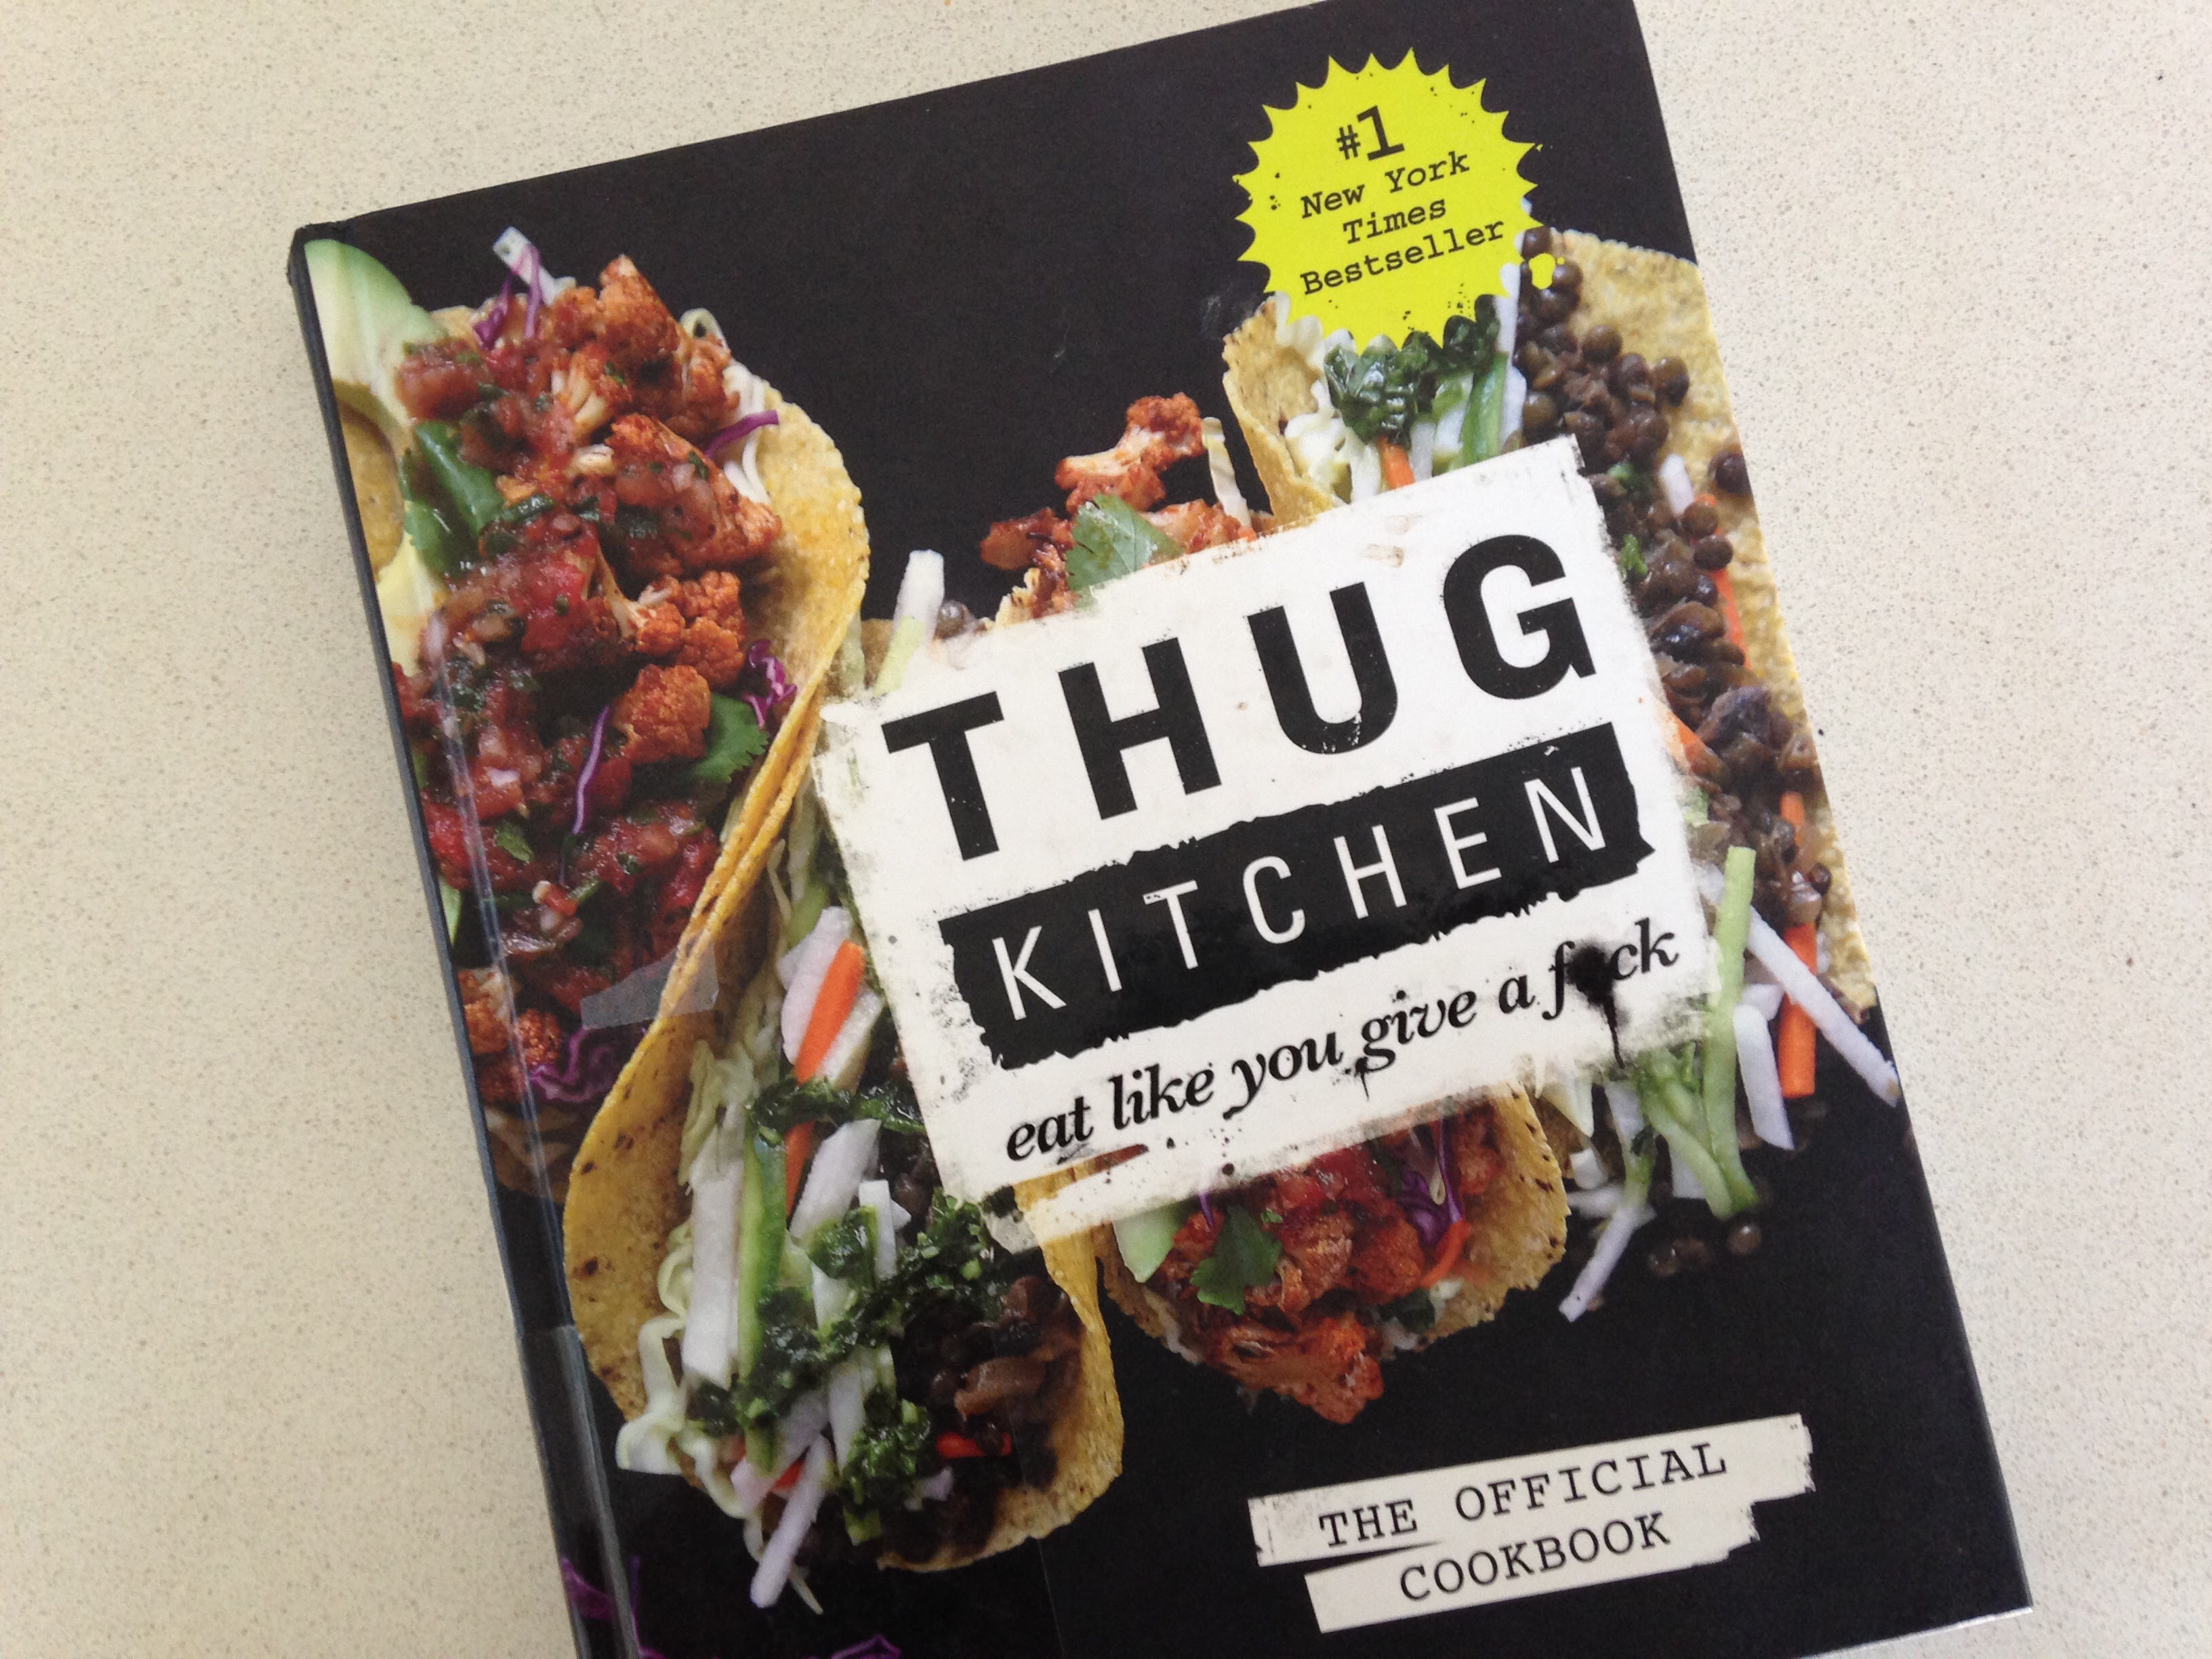 Thug Kitchen cookbook